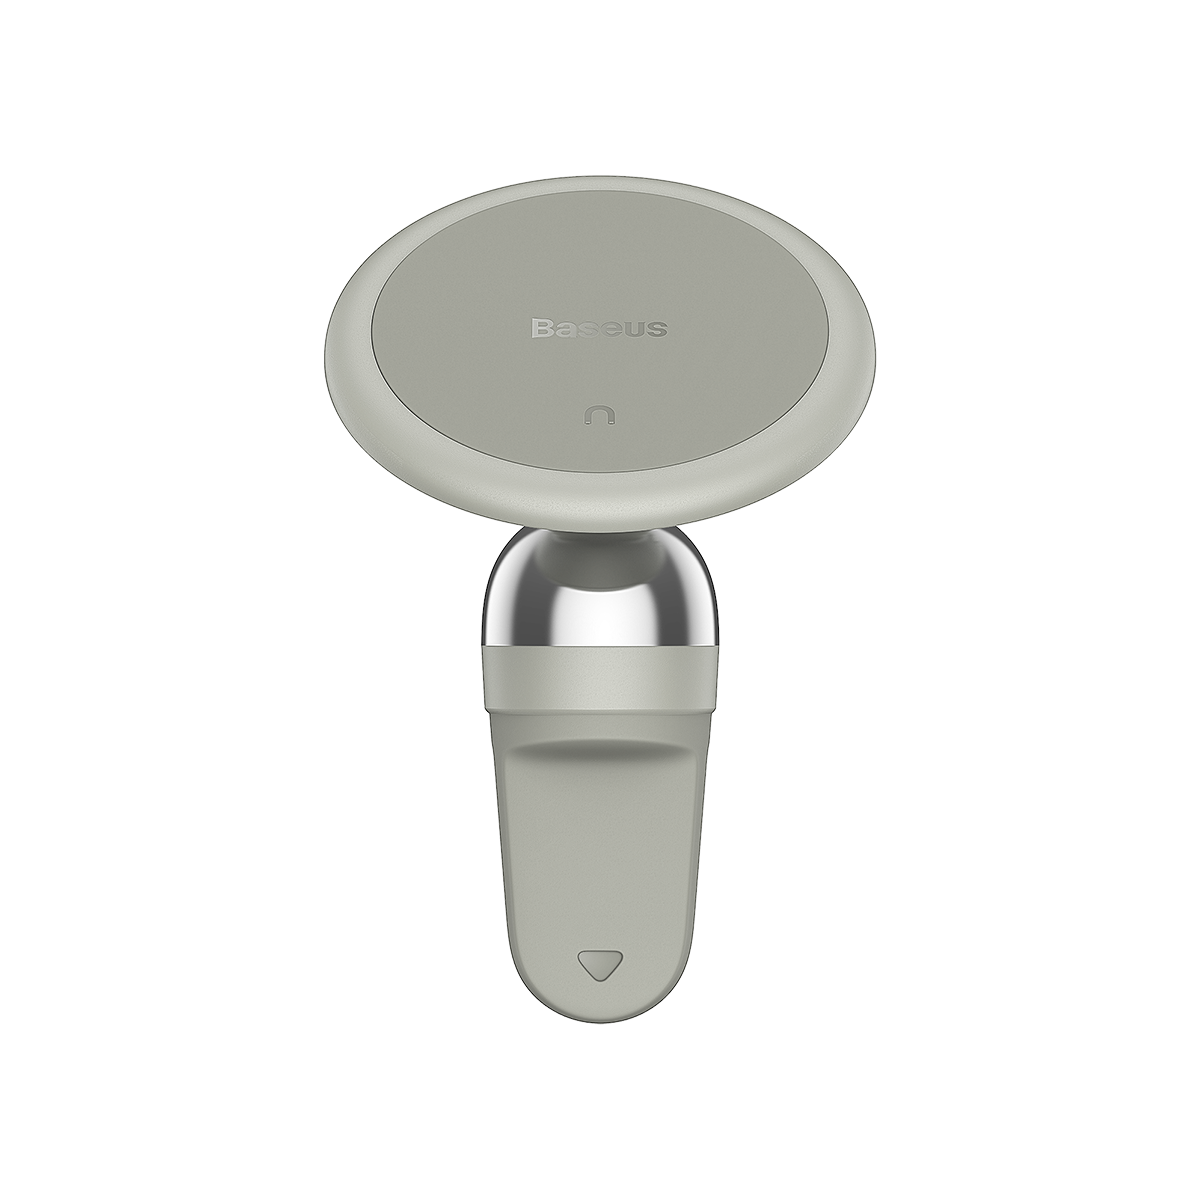 Автомобильный держатель Baseus C01 Magnetic Phone Holder (Air Outlet Version) creamy-white (SUCC000102)